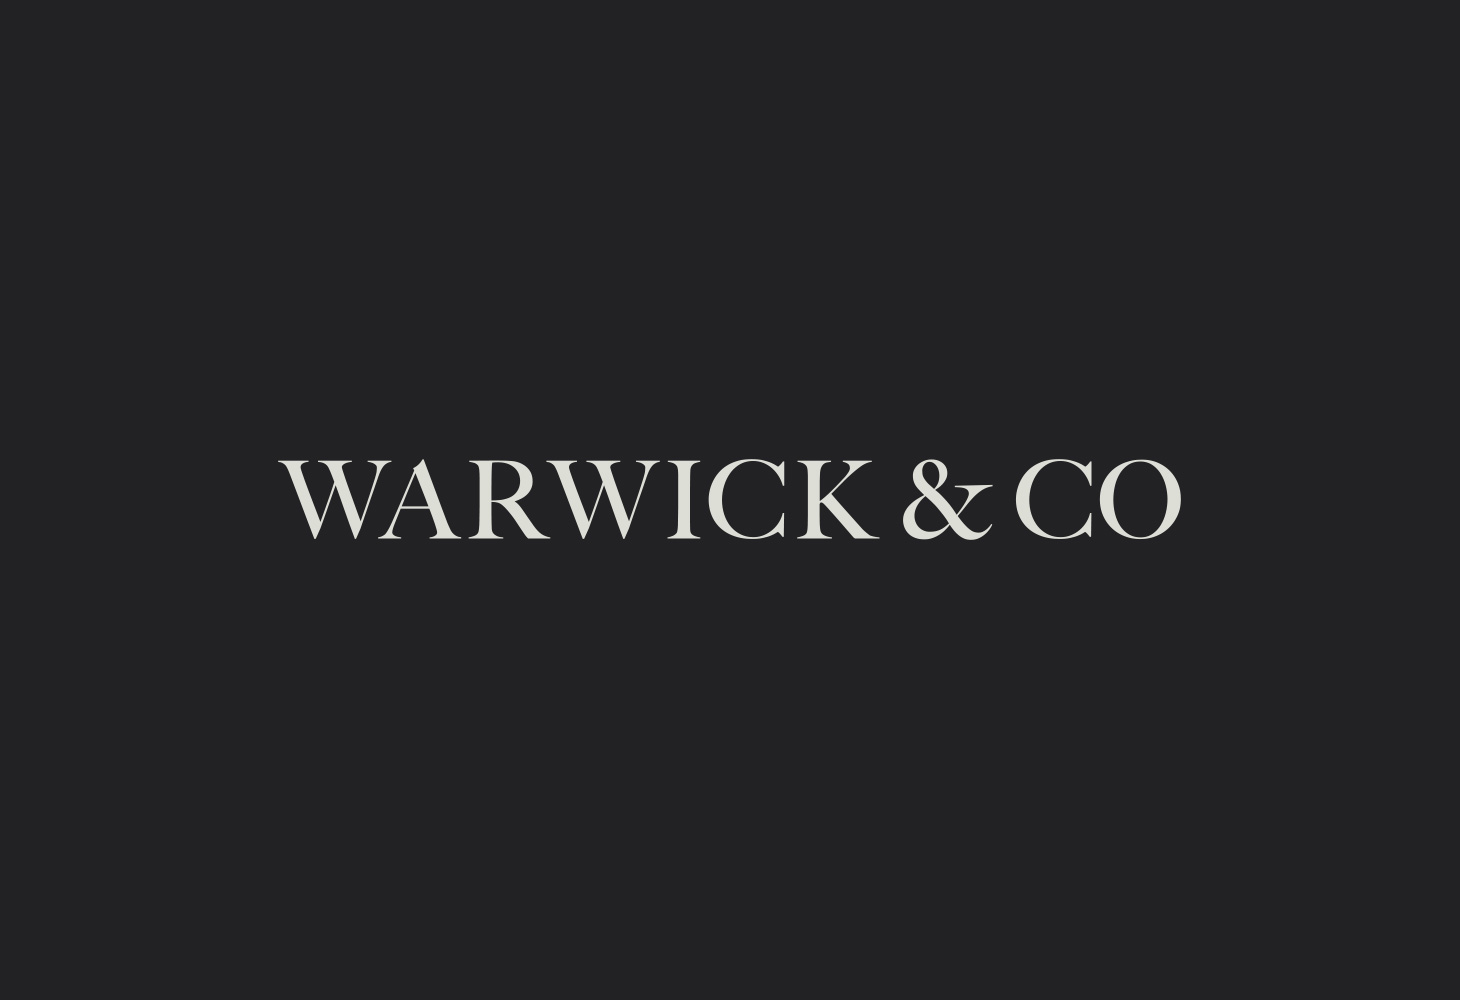 Warwick & Co - Logotype